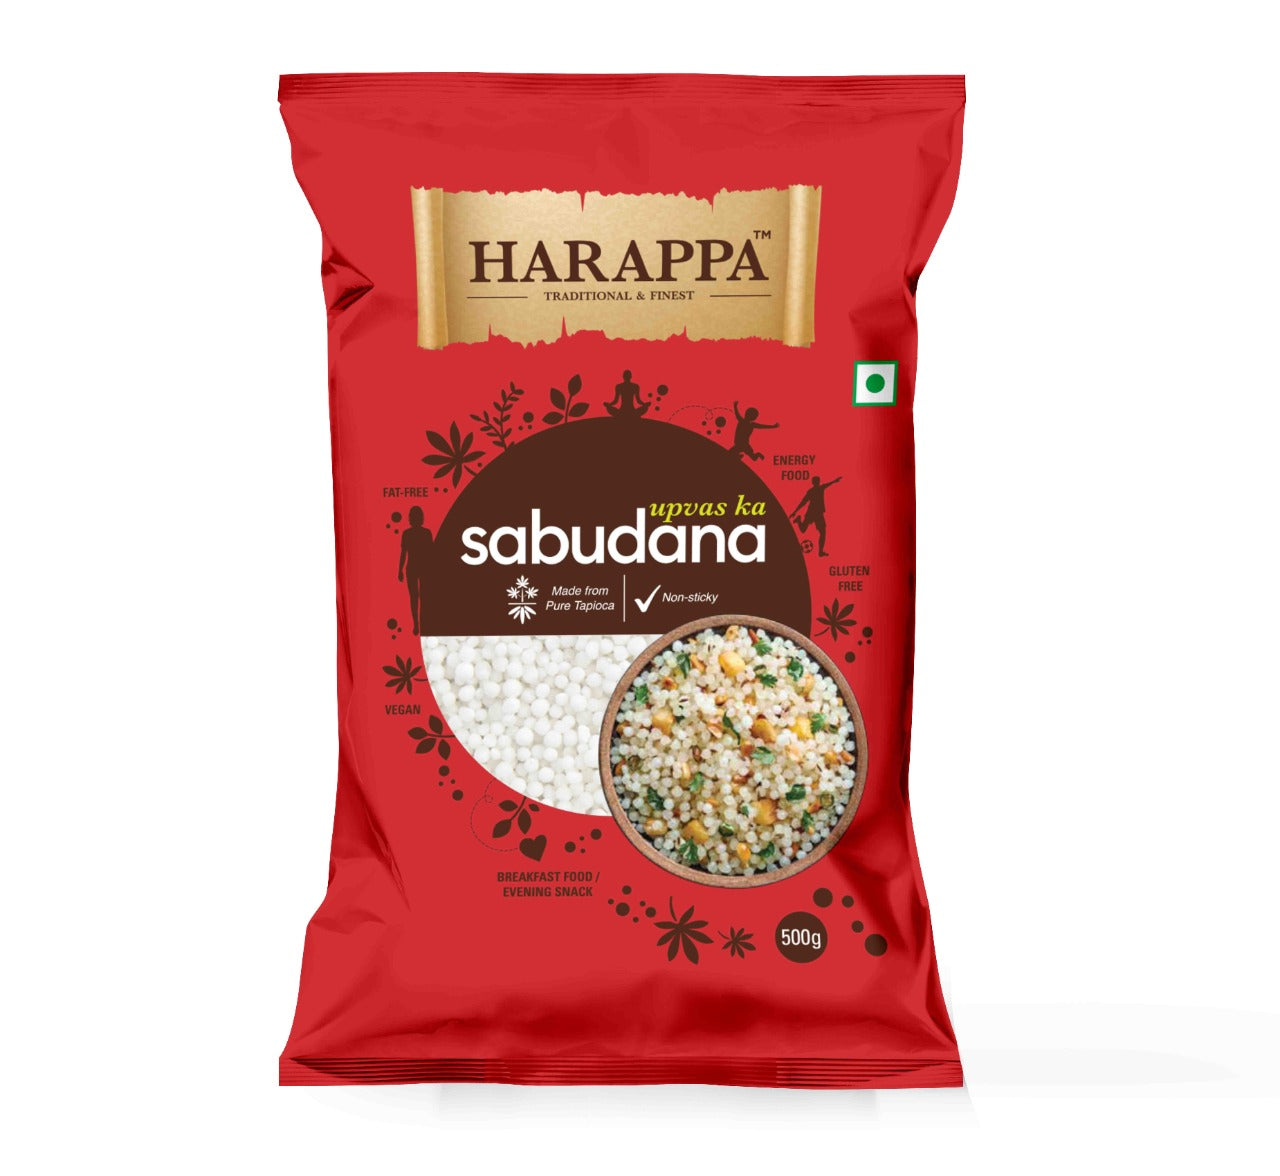 Harappa Sabudana made hygienically 